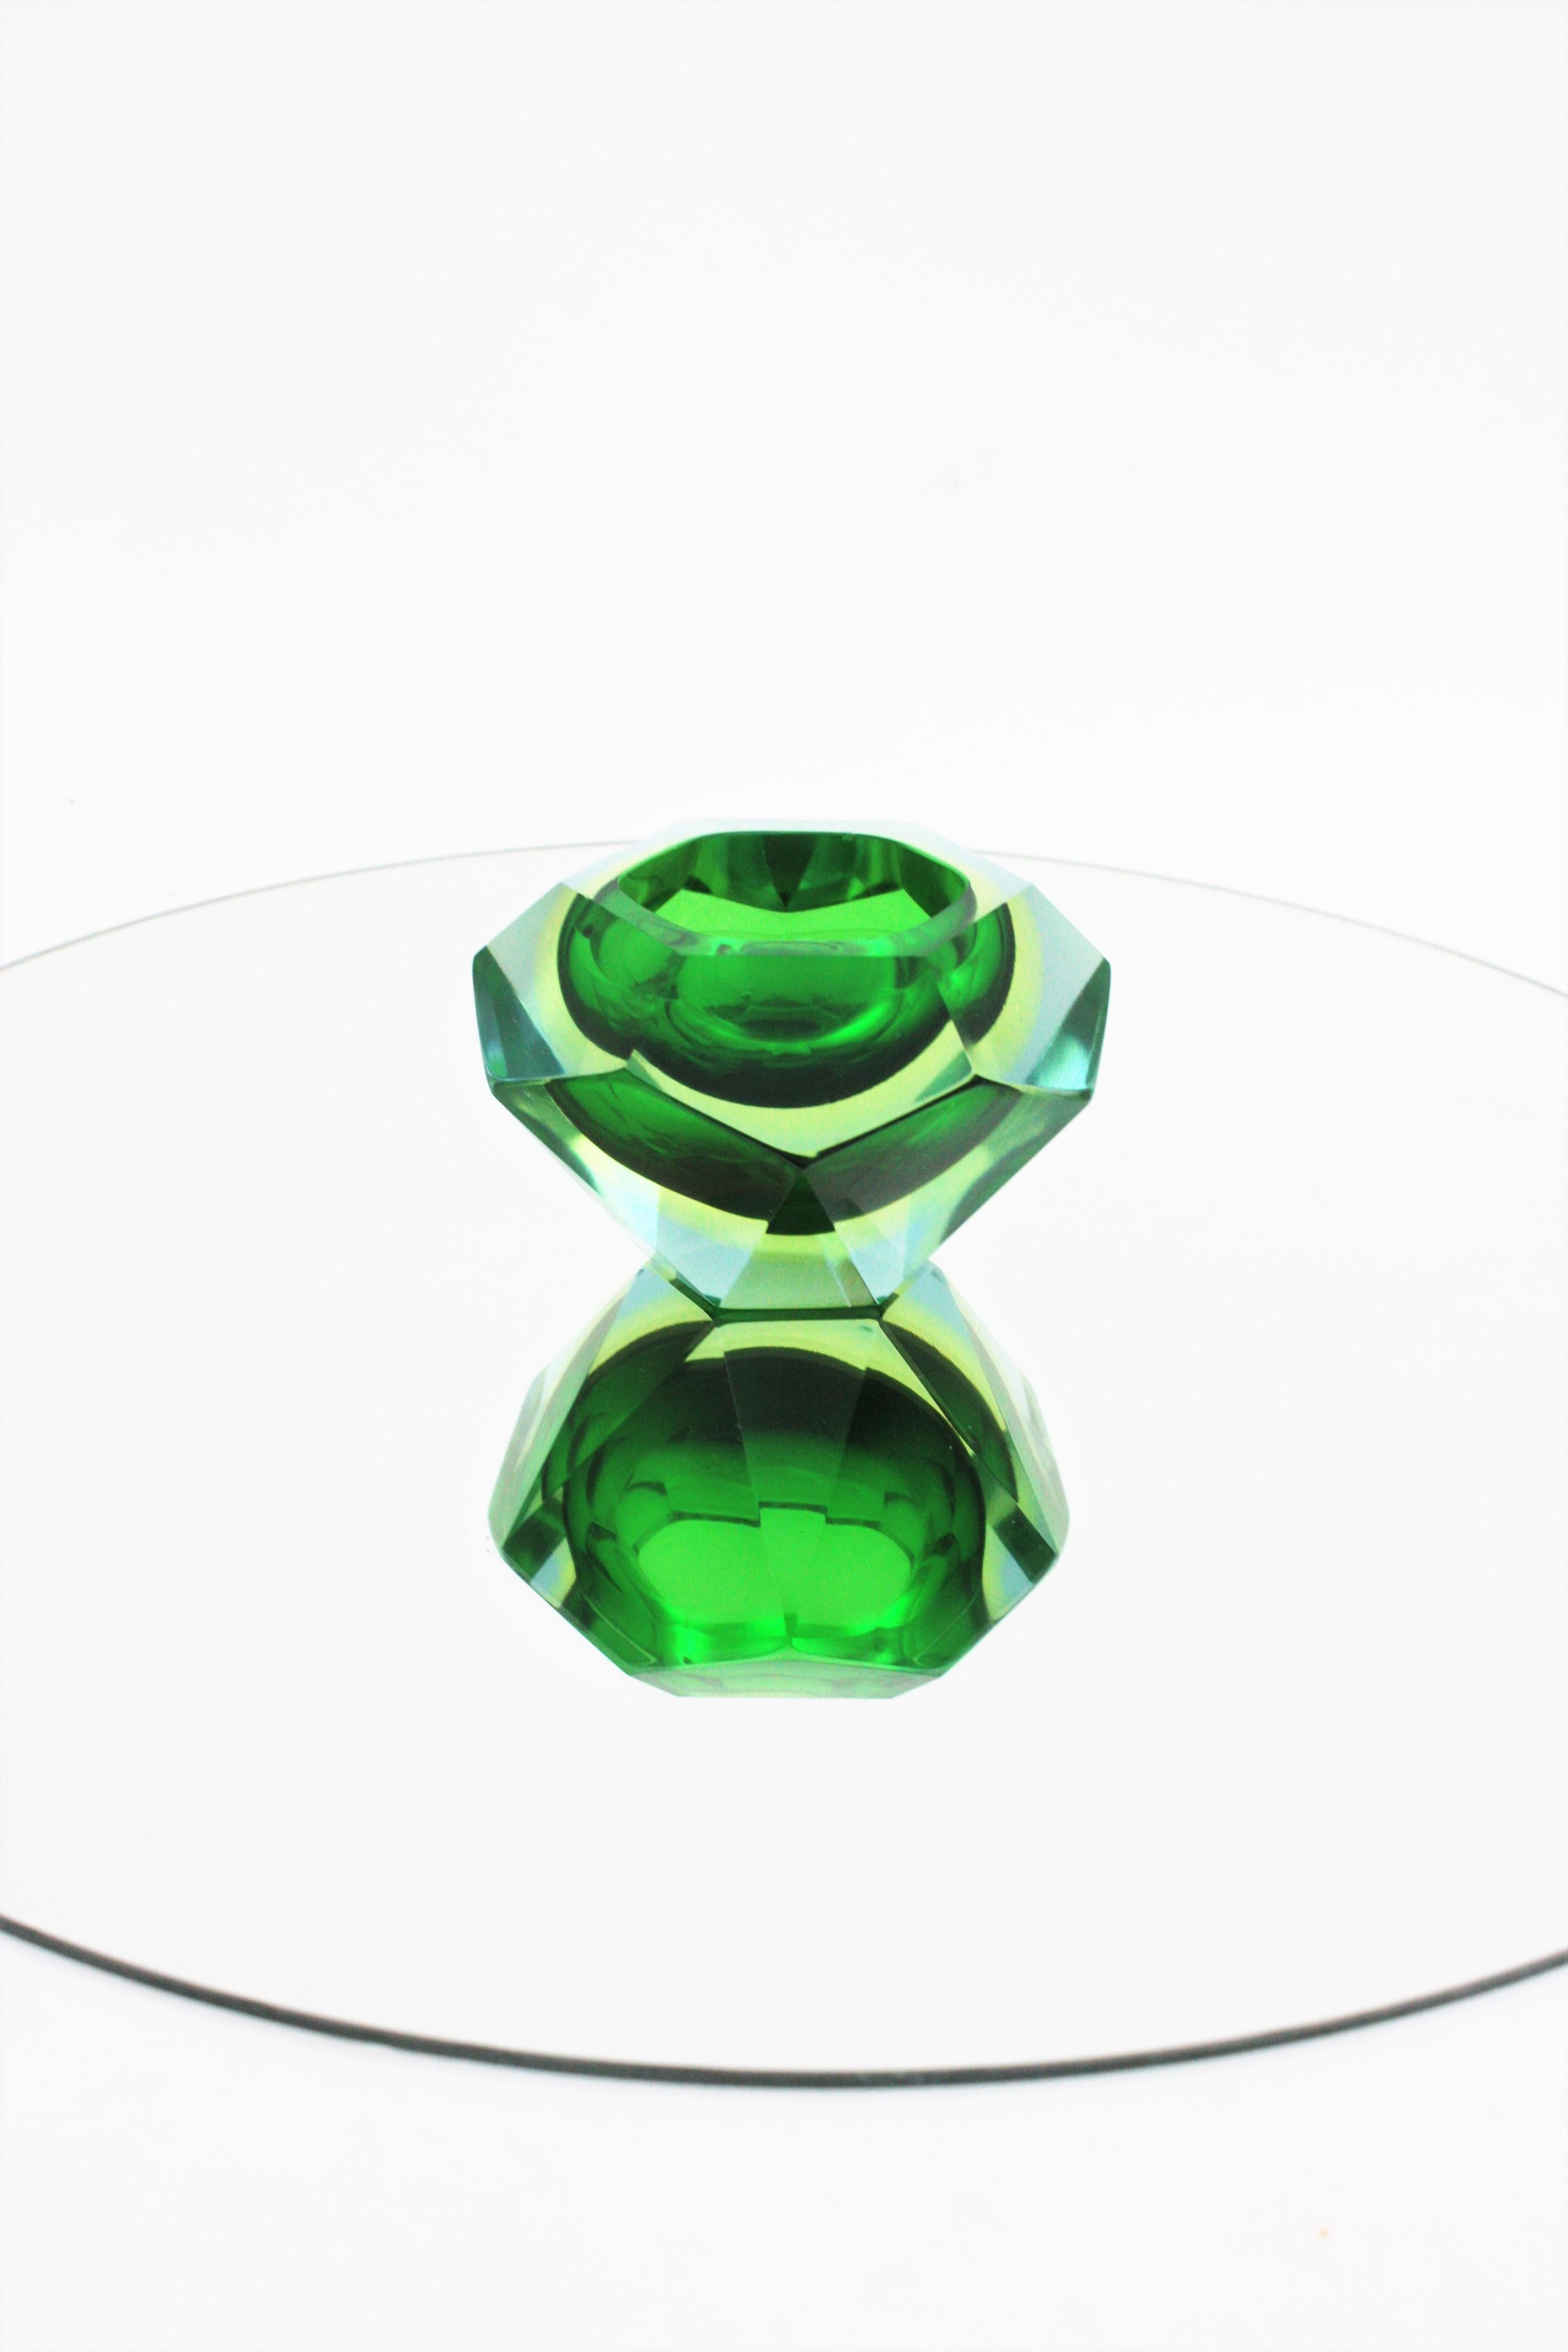 italien Flavio Poli Murano Green Yellow Sommerso Faceted Art Glass Bowl (bol en verre d'art à facettes) en vente